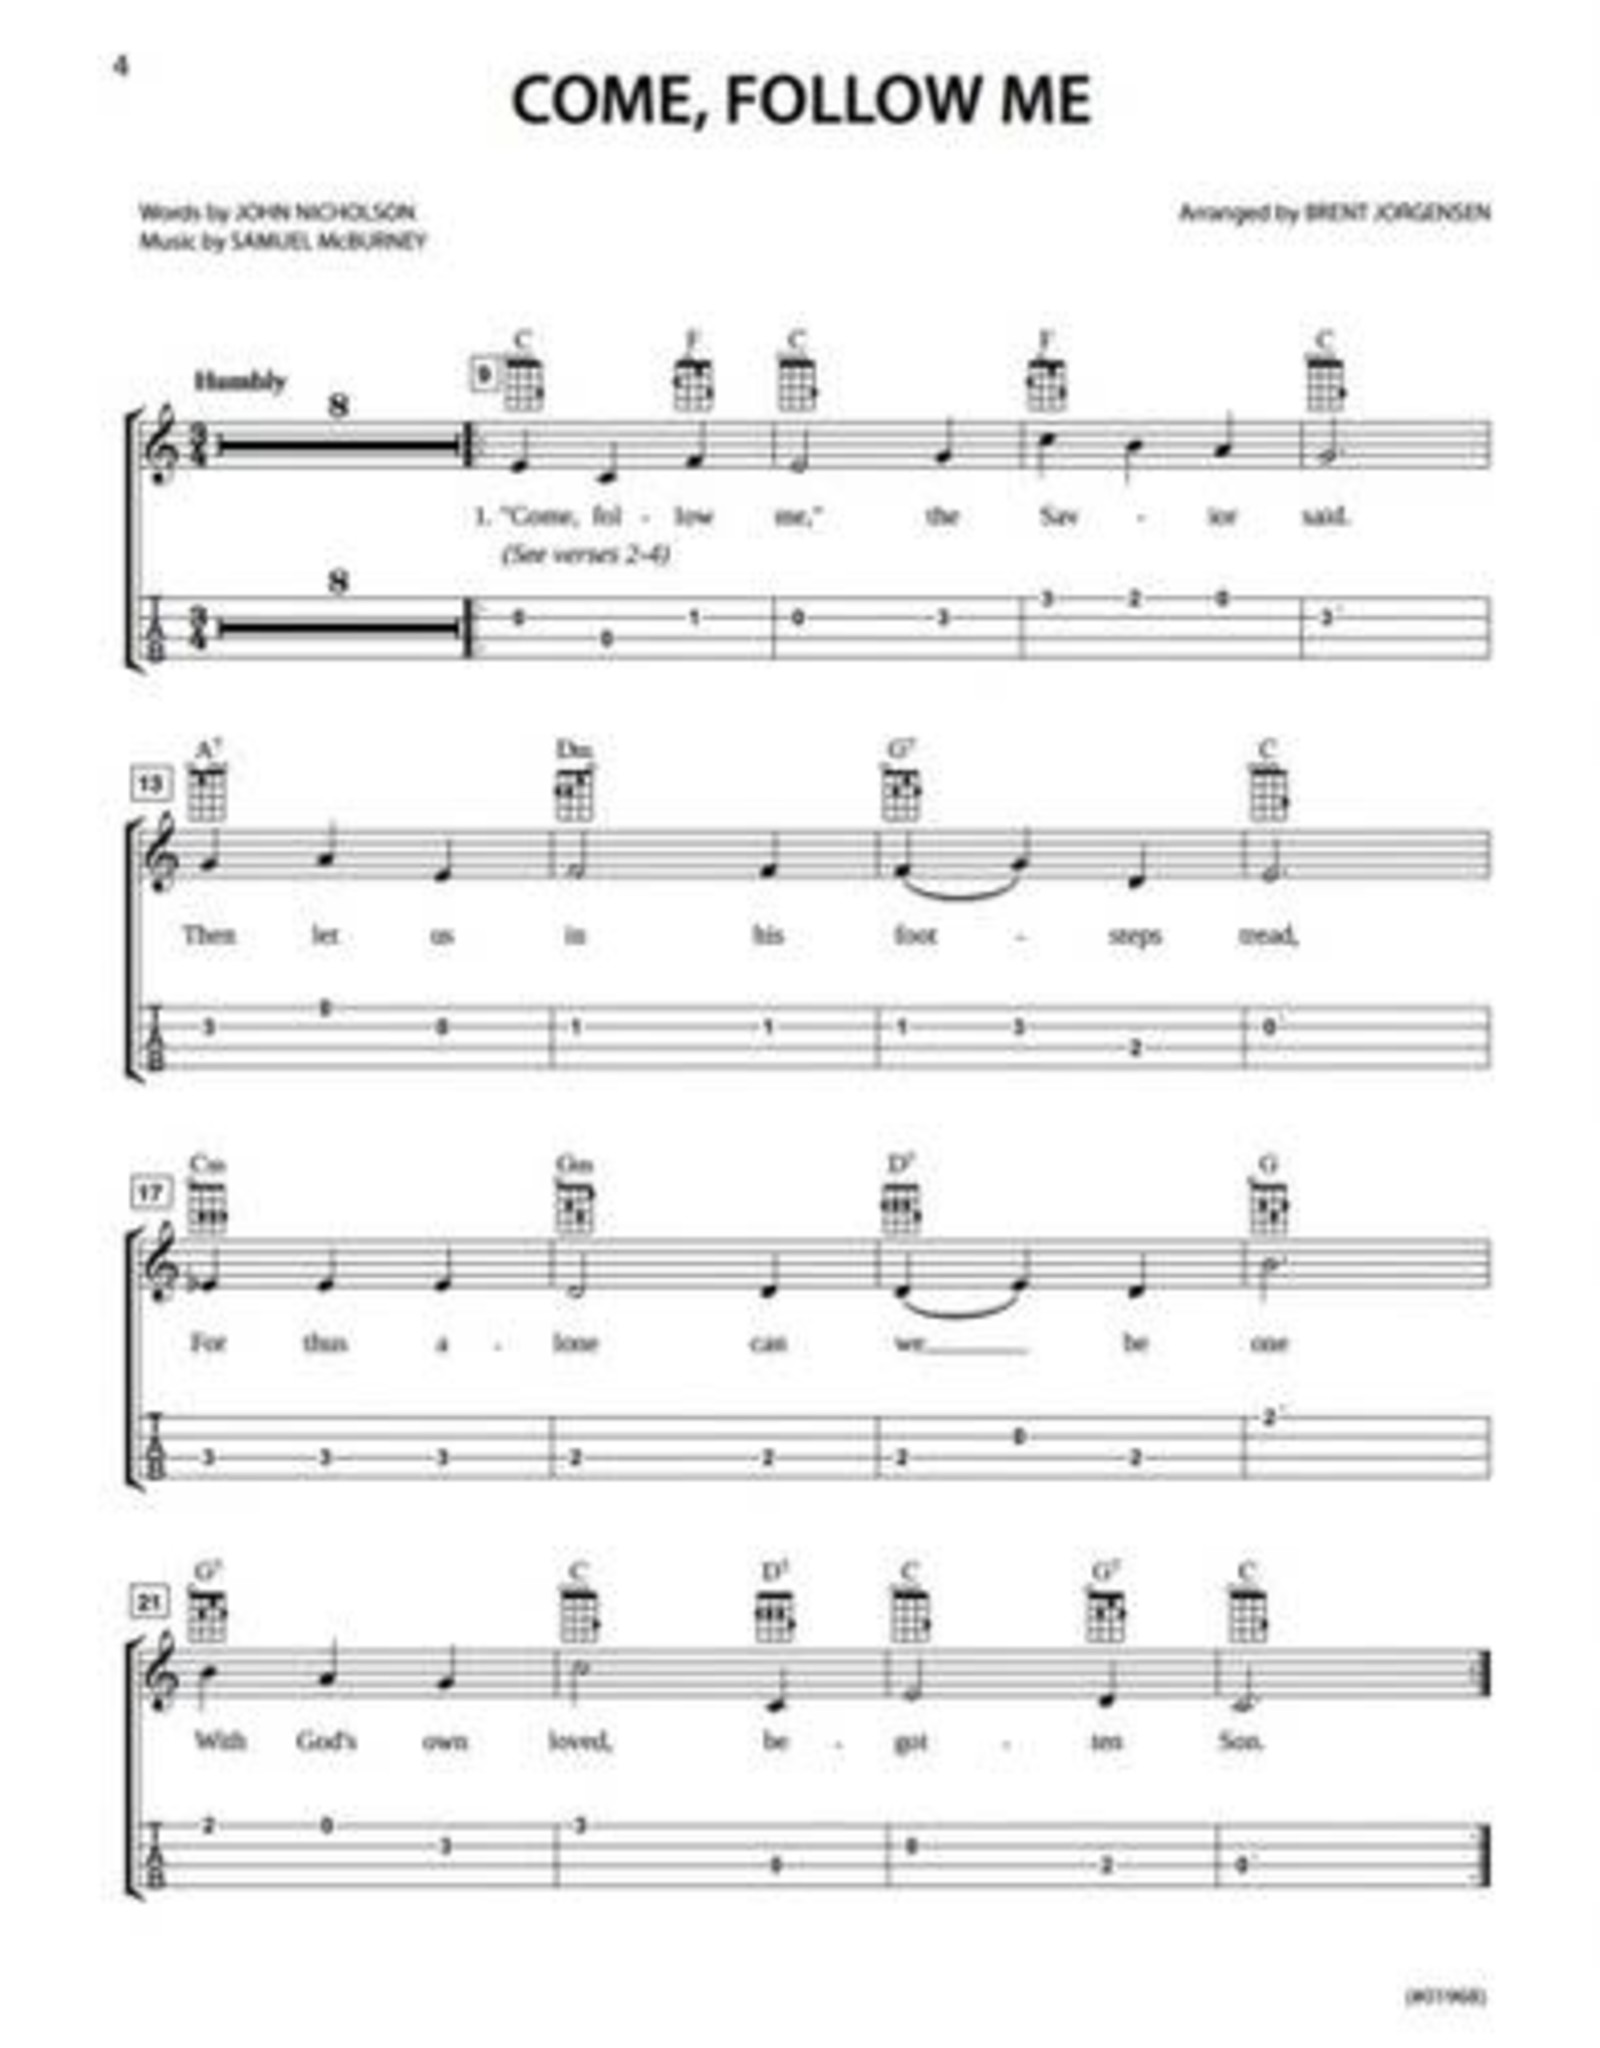 Jackman Music Hymn-Alongs Vol. 1 - arr. Brent Jorgensen - Ukulele